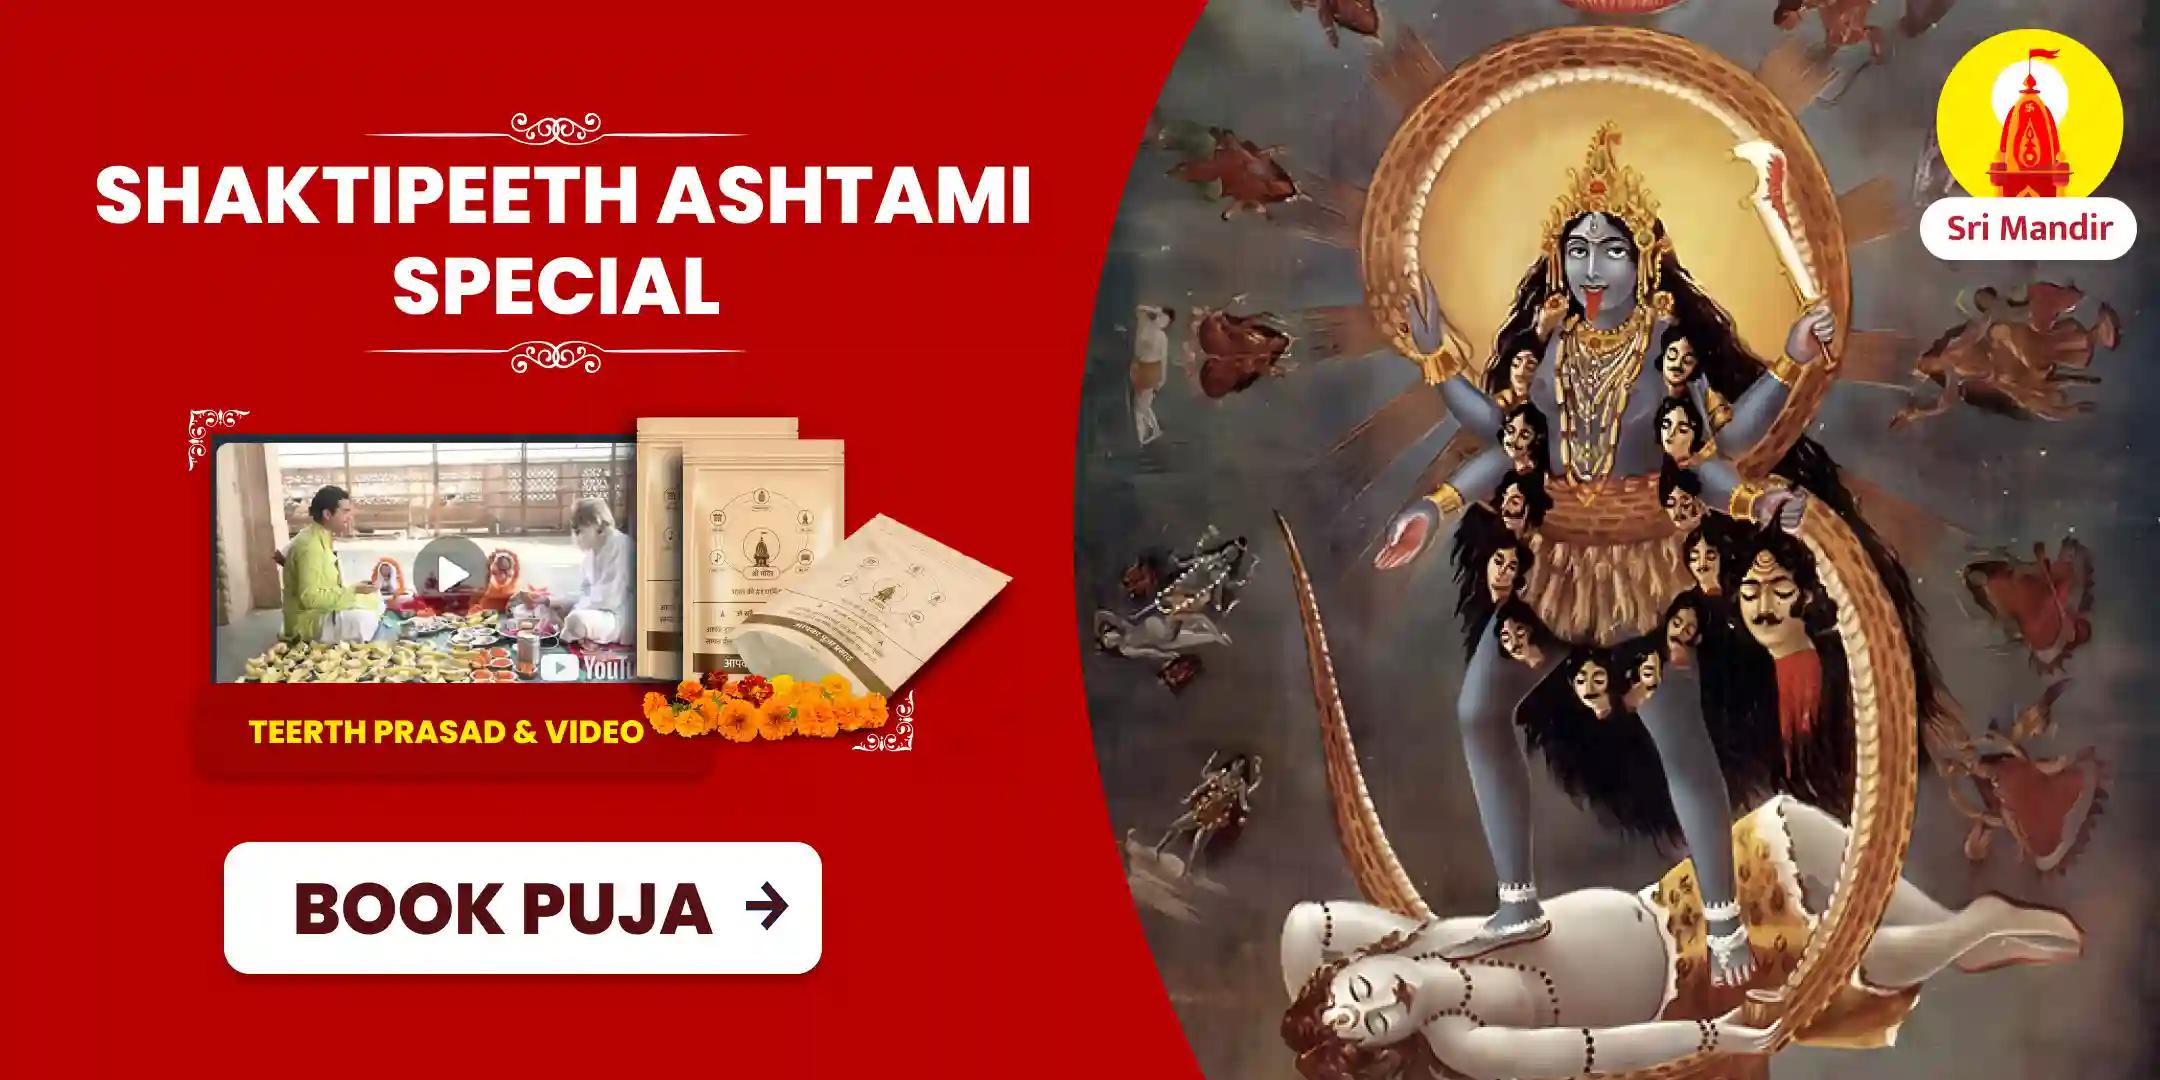 Shaktipeeth Ashtami Special Maa Kali Tantra Yukta Mahapuja for Protection from Negative Energy and Overcoming Fear